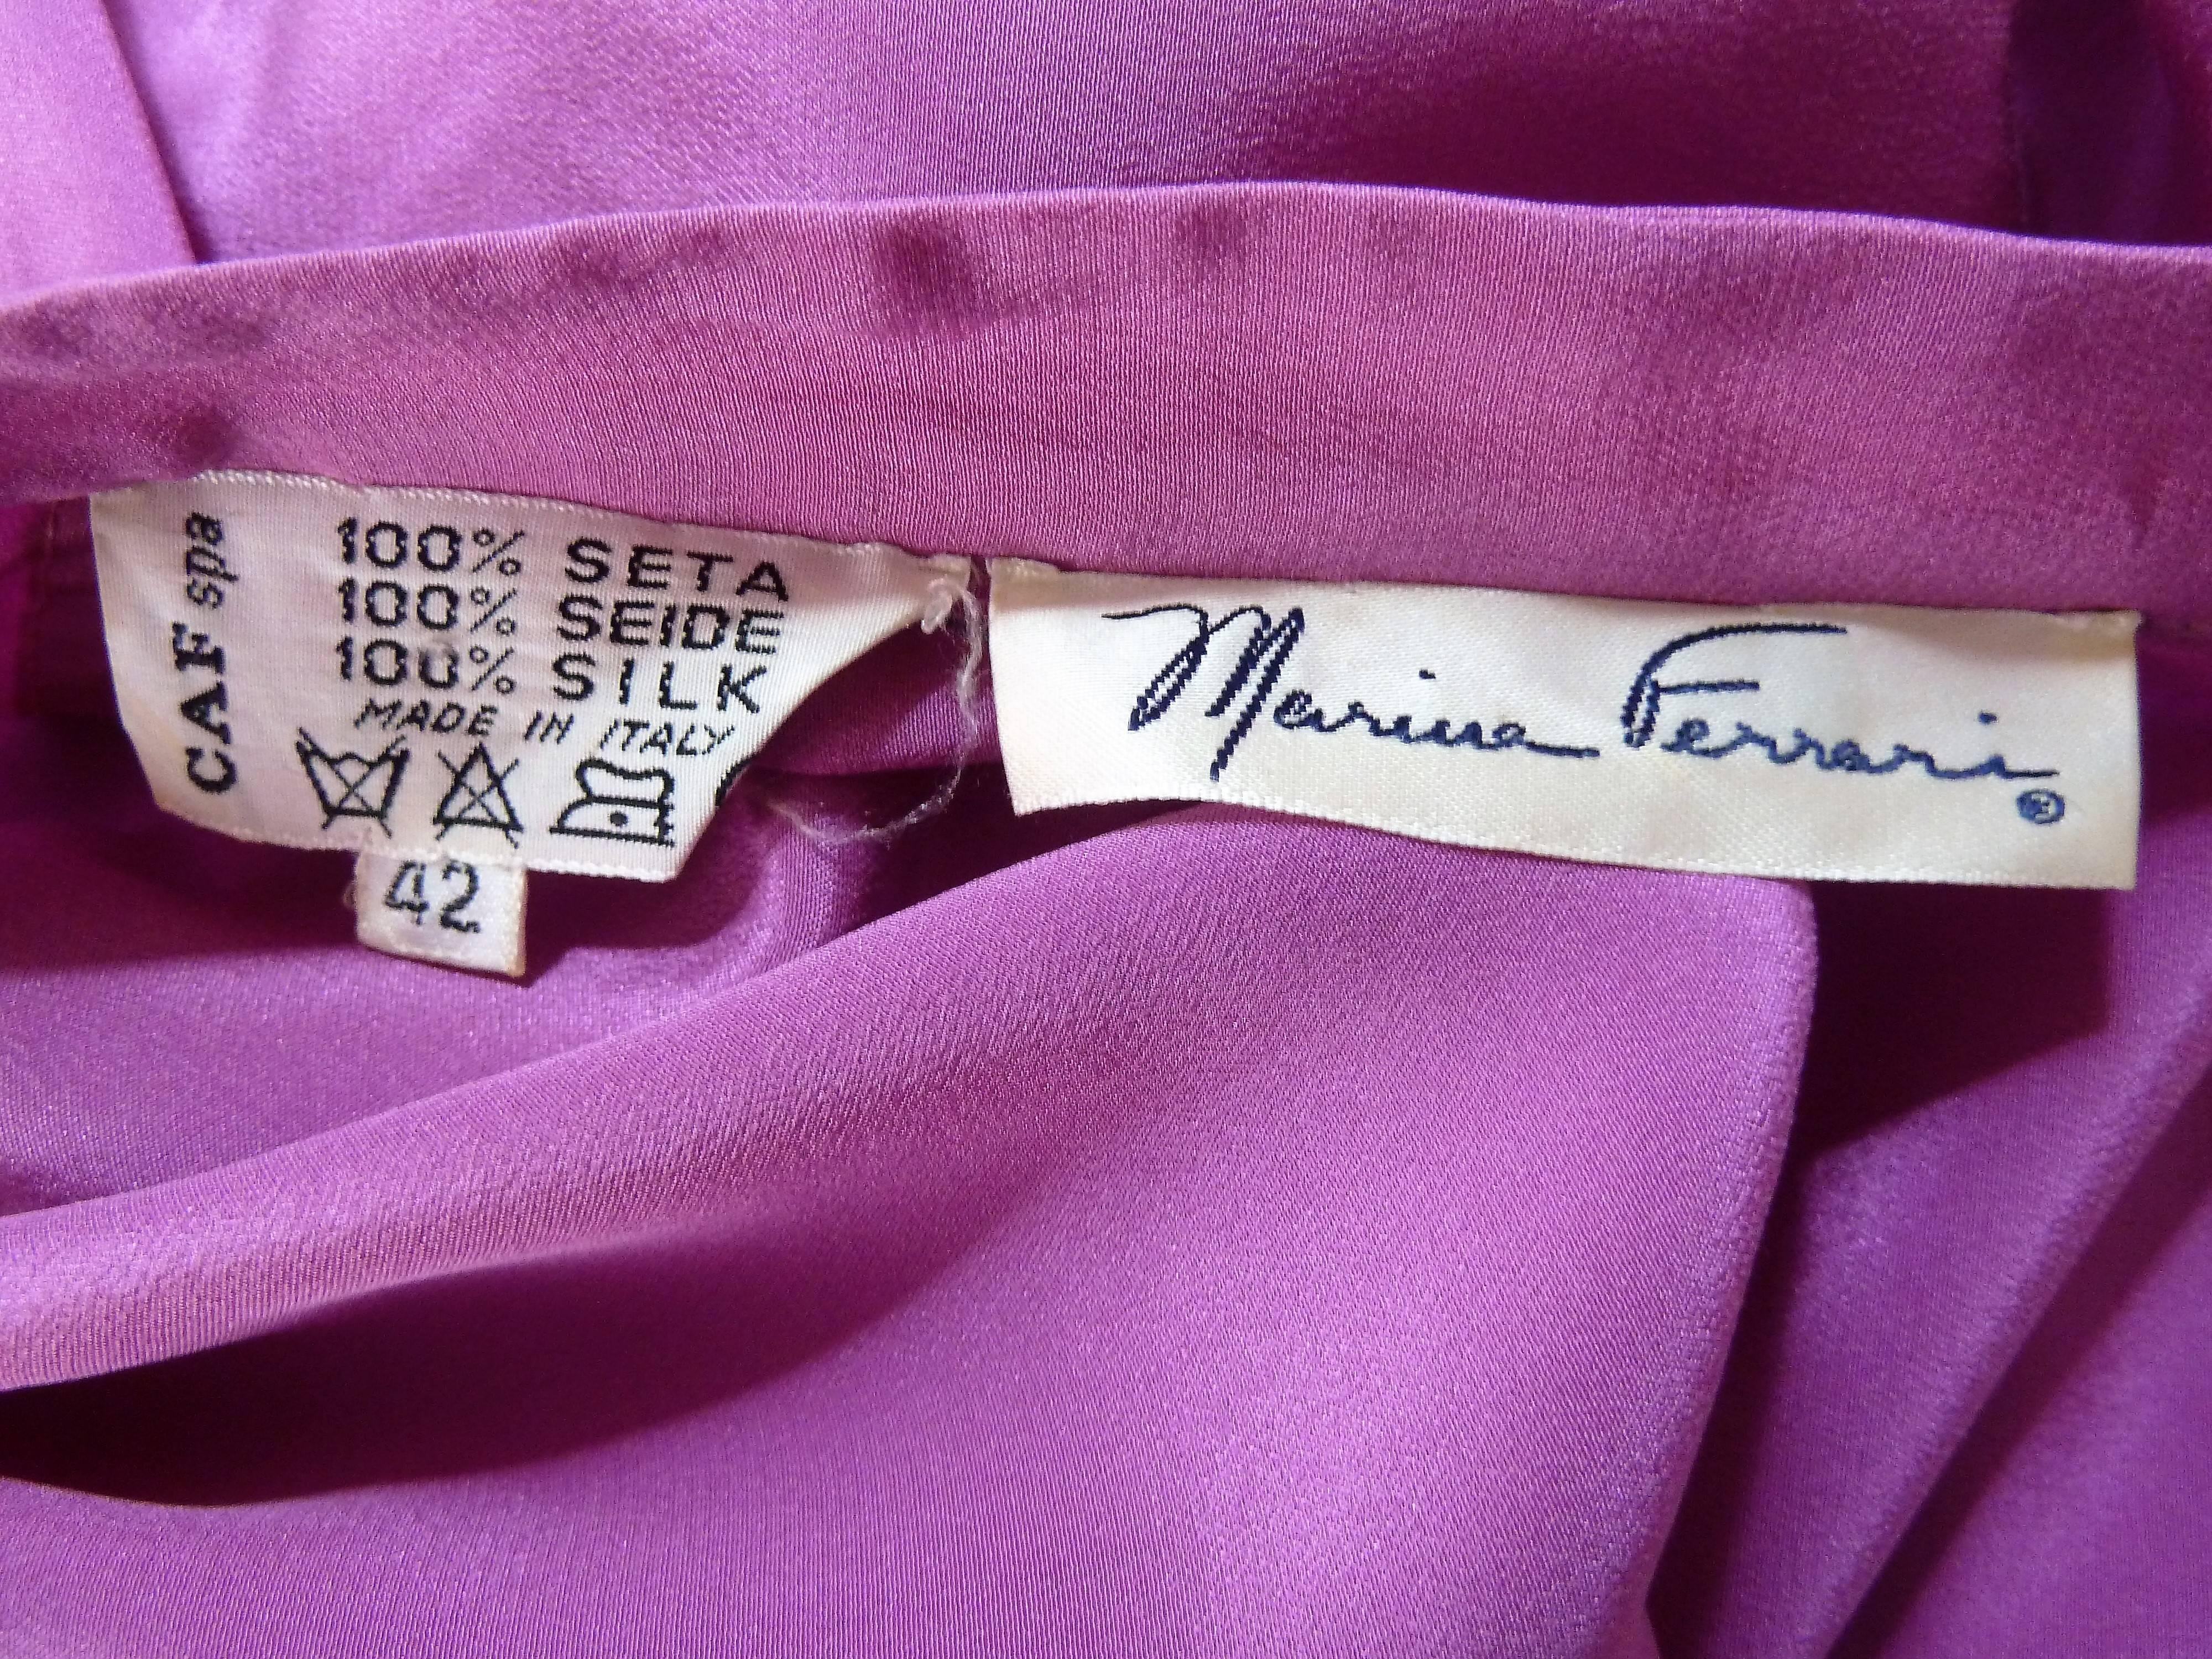 Marina Ferrari 1970s dress set 100% silk jacket blouse and skirt pink size 42 For Sale 3